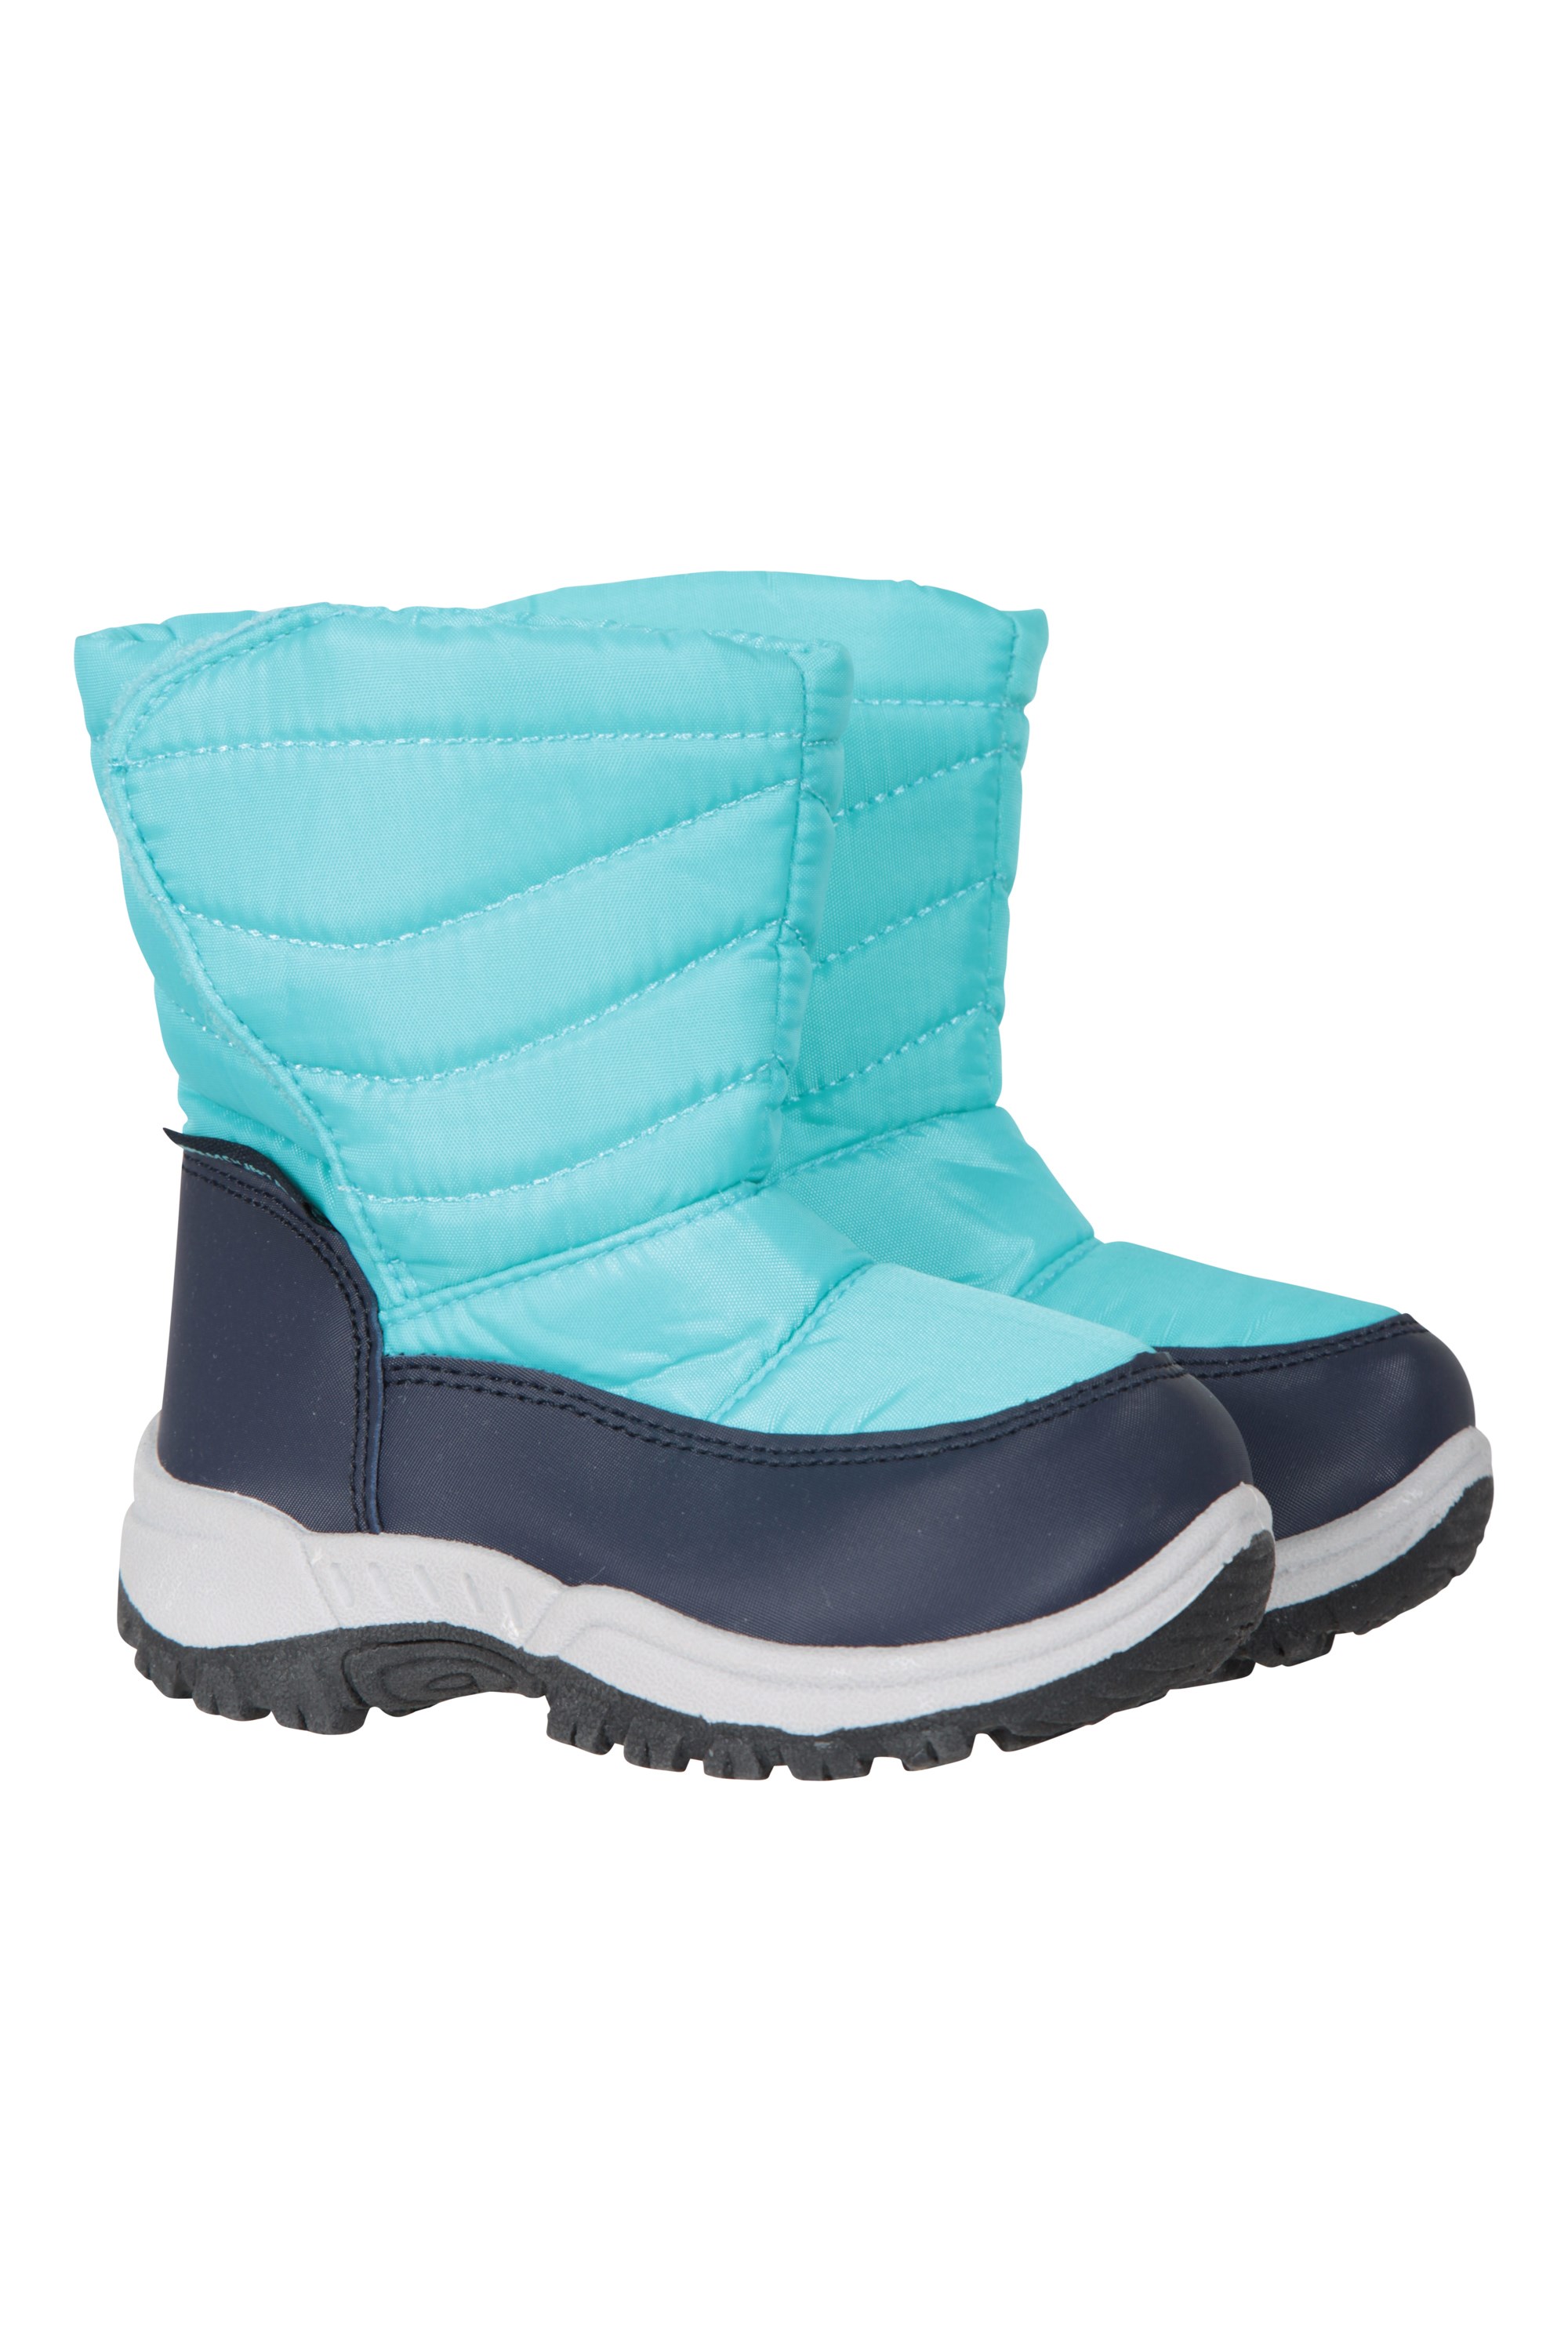 Caribou Junior Snow Boots | Mountain 